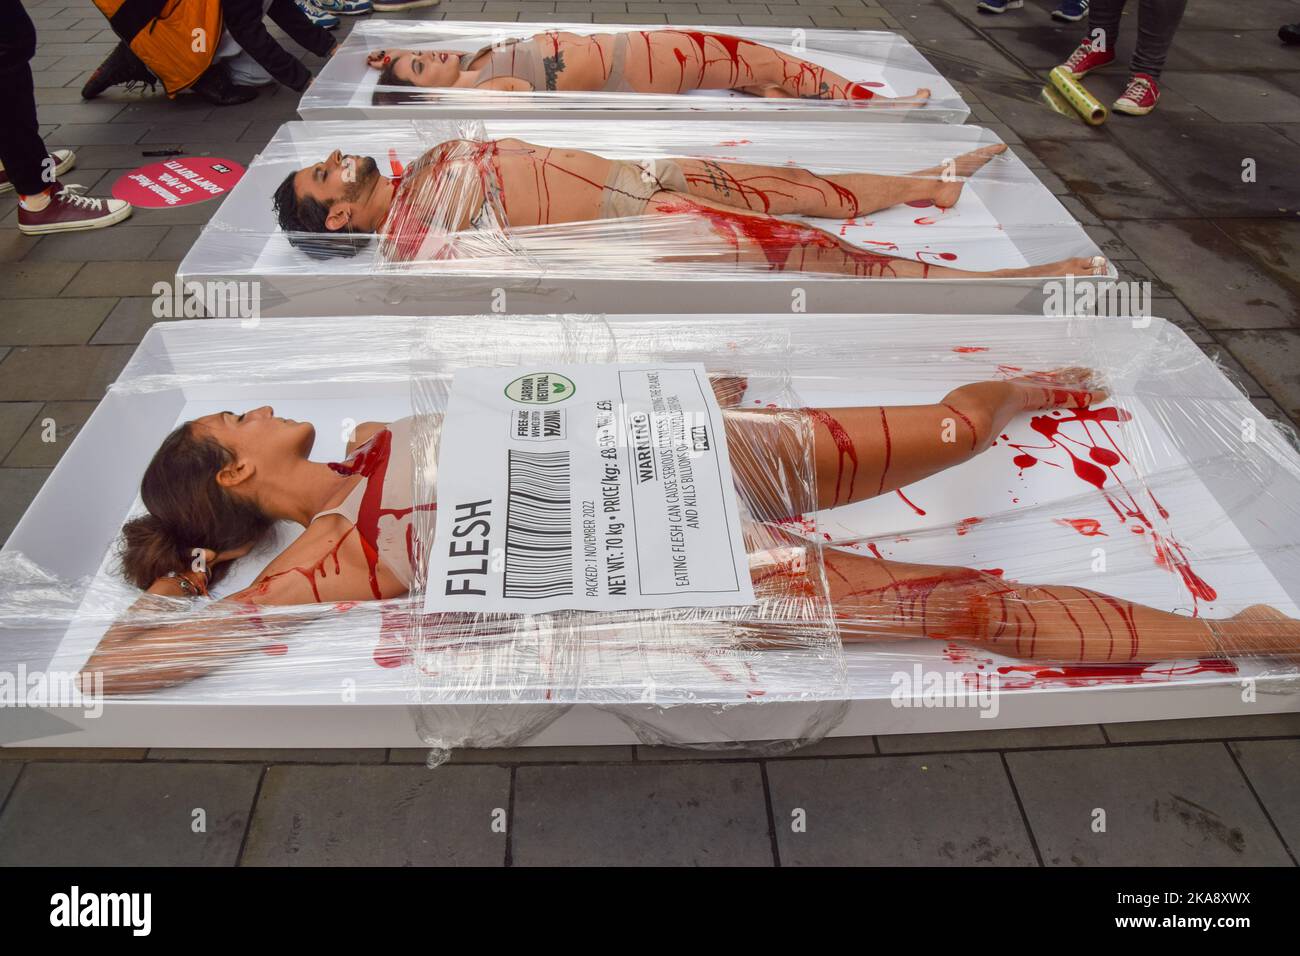 Human Meat' Served Up in Sydney Mall - News - PETA Australia